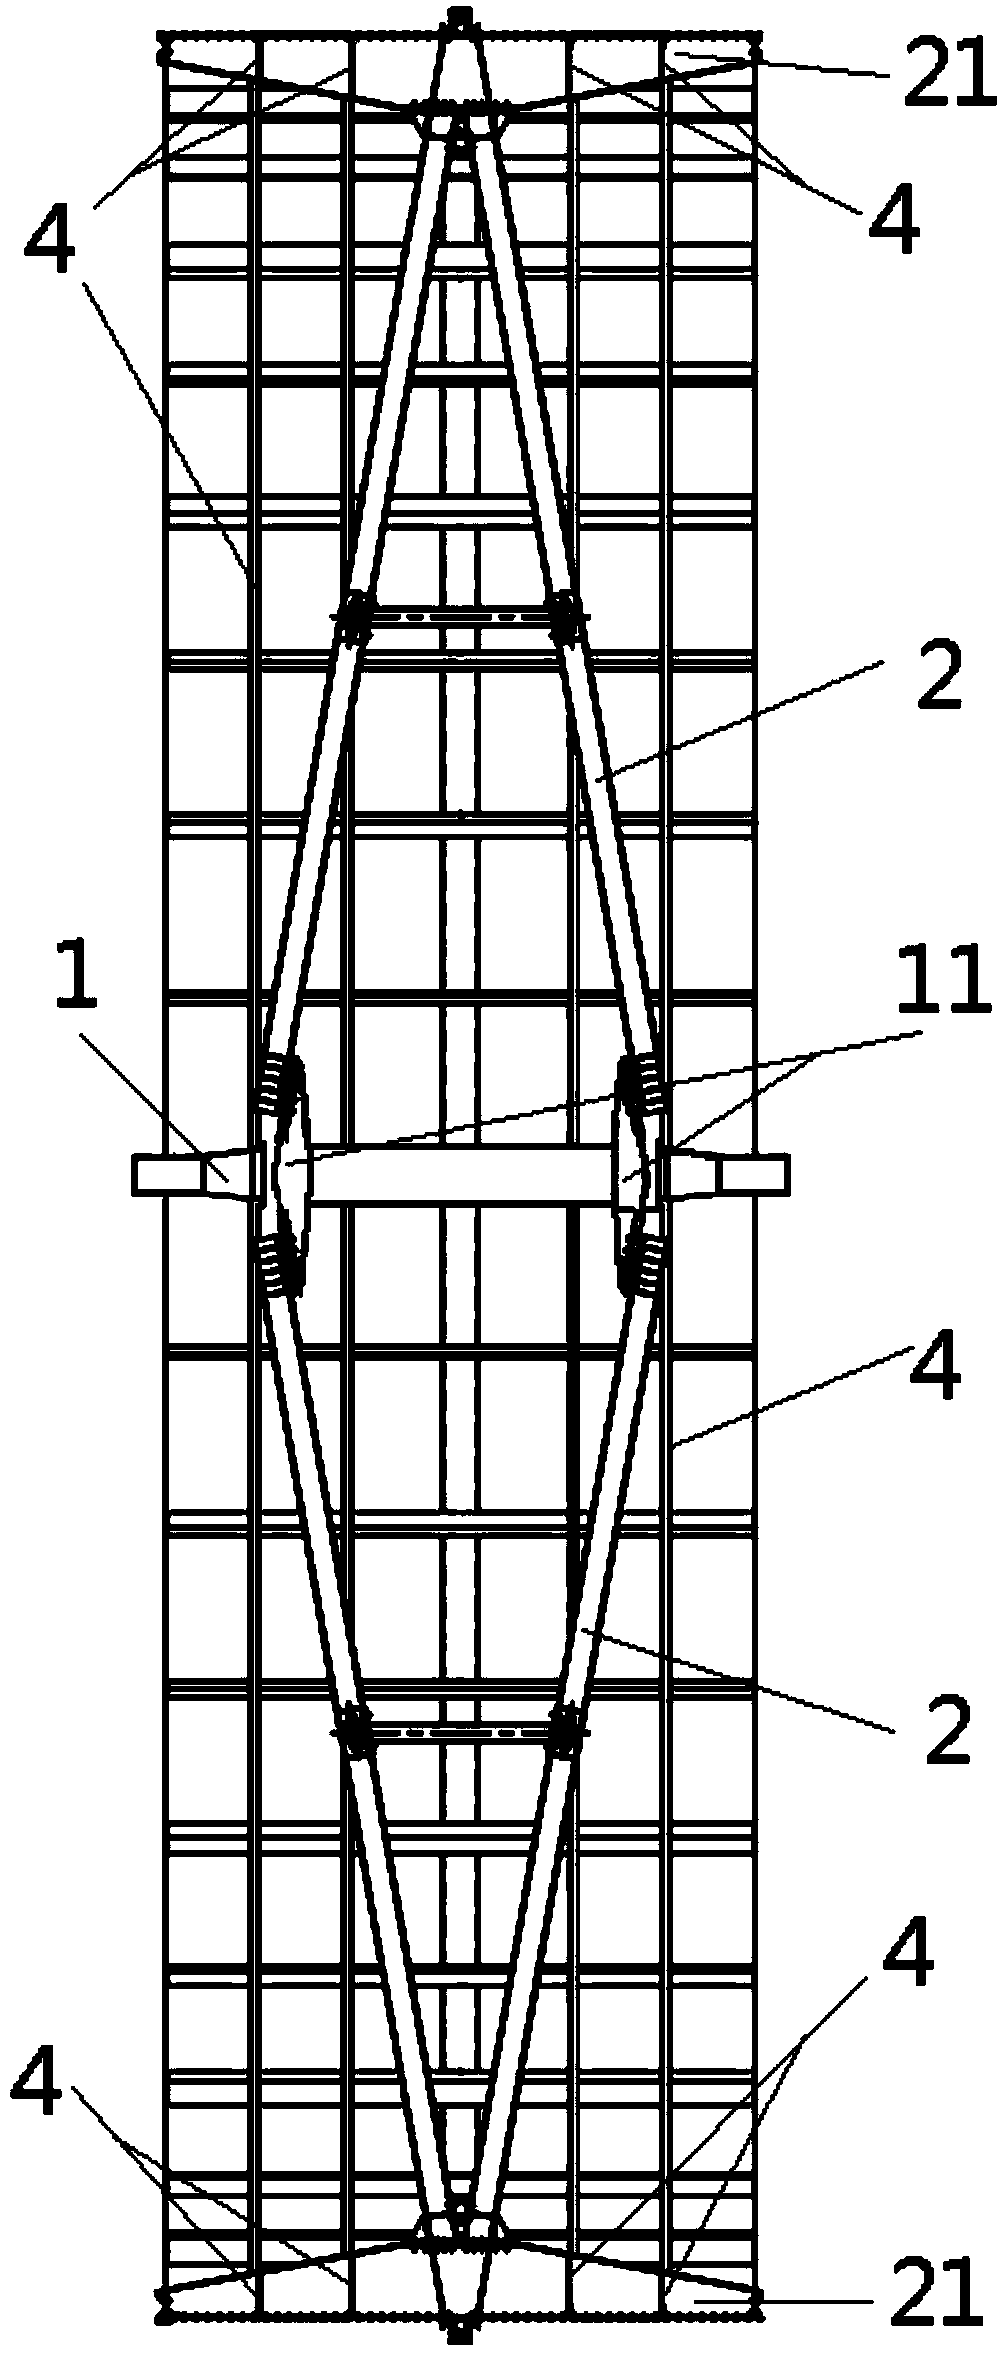 Method for mounting drum framework of drum strainer